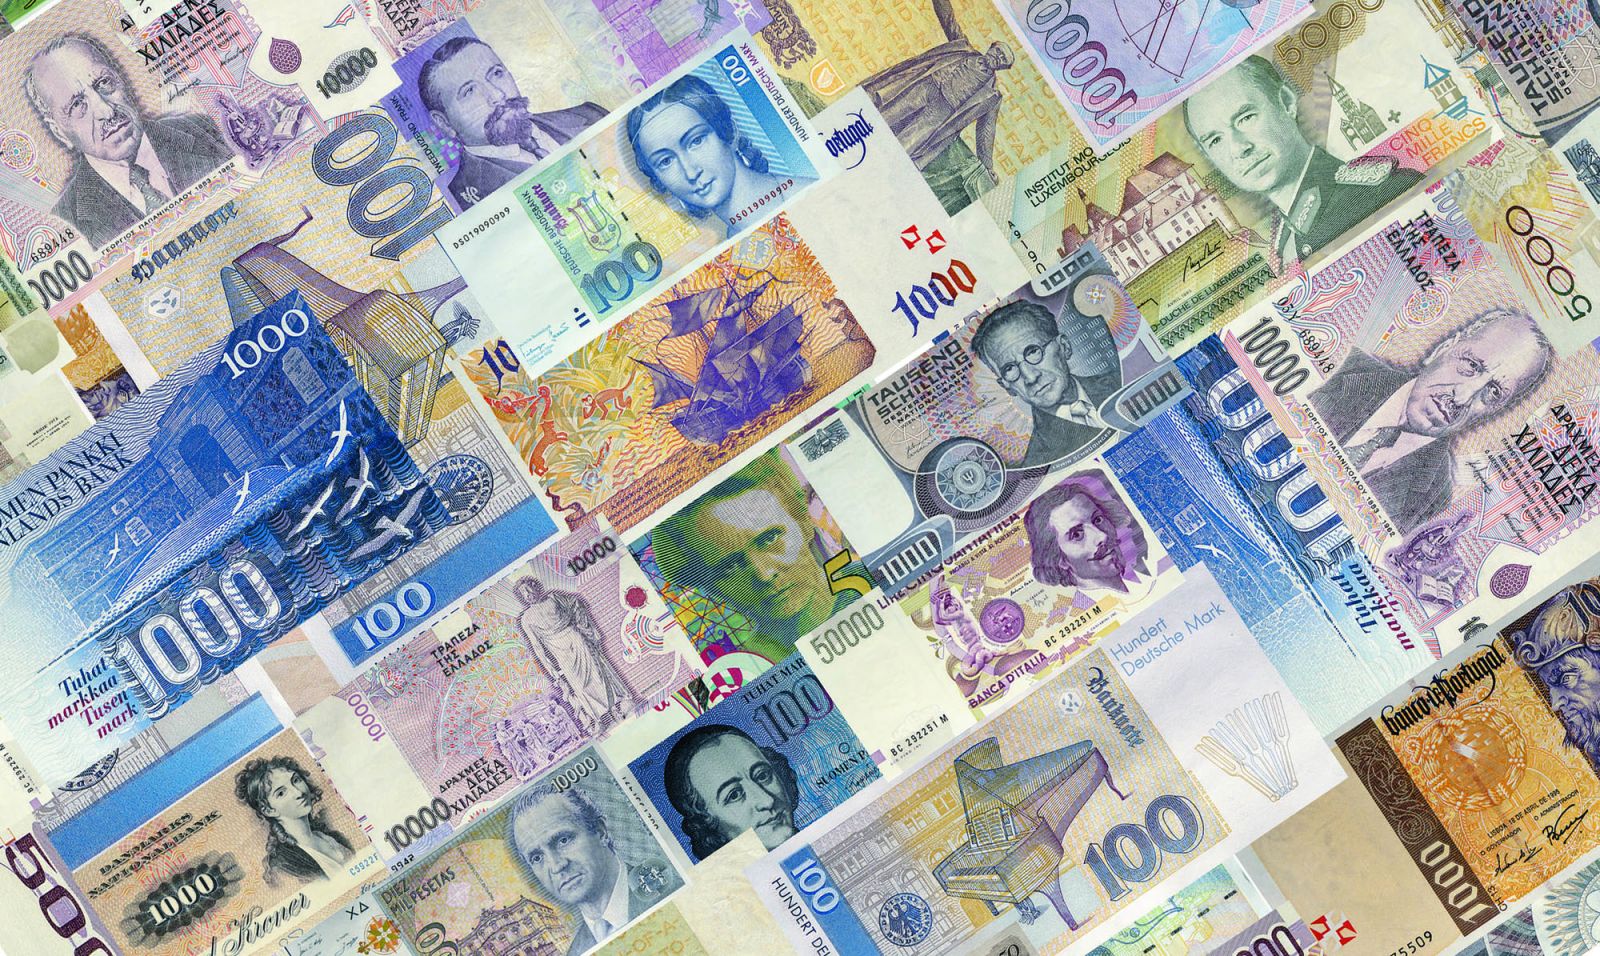 Обмен всех валют в украине майнинг биткоин кончился